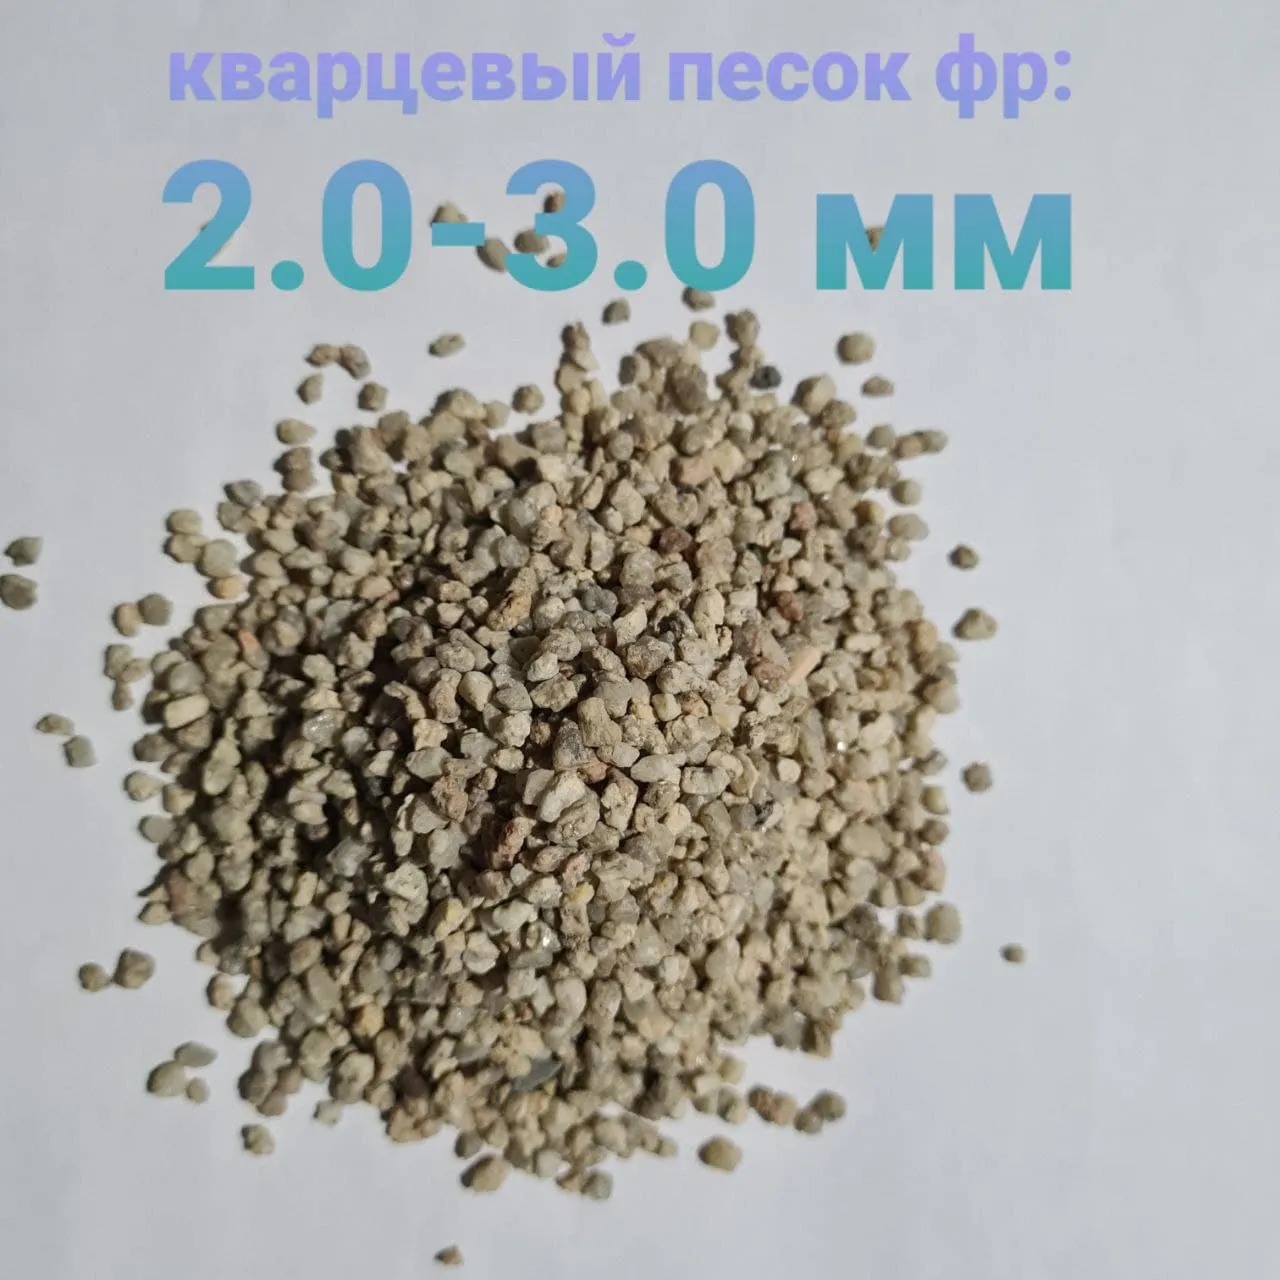 Кварцевый песок фр 2,0-3,0 мм#1